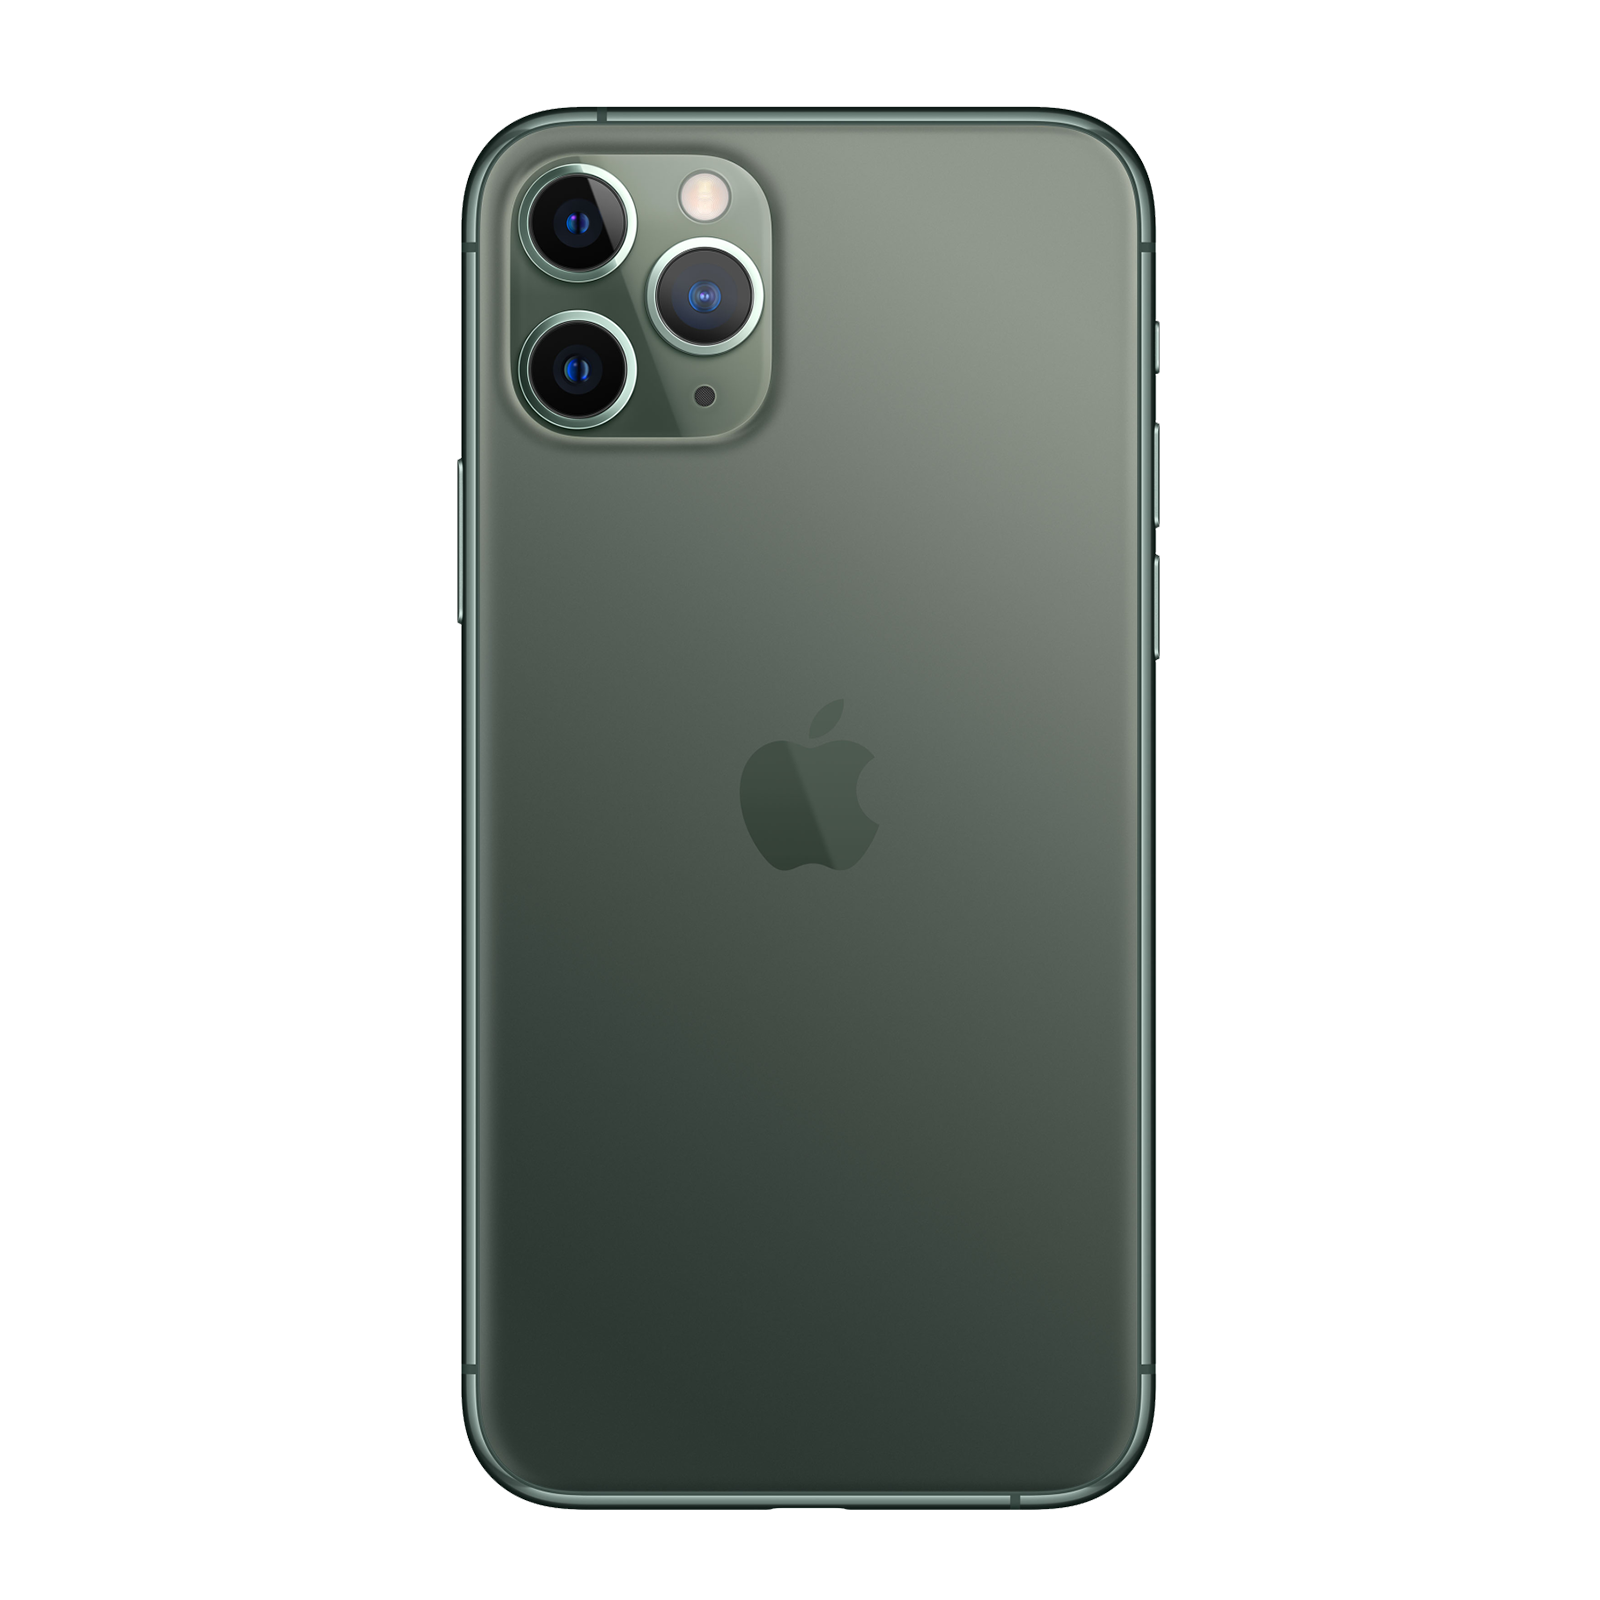 Apple iPhone 11 Pro 64GB Midnight Green Fair - Verizon